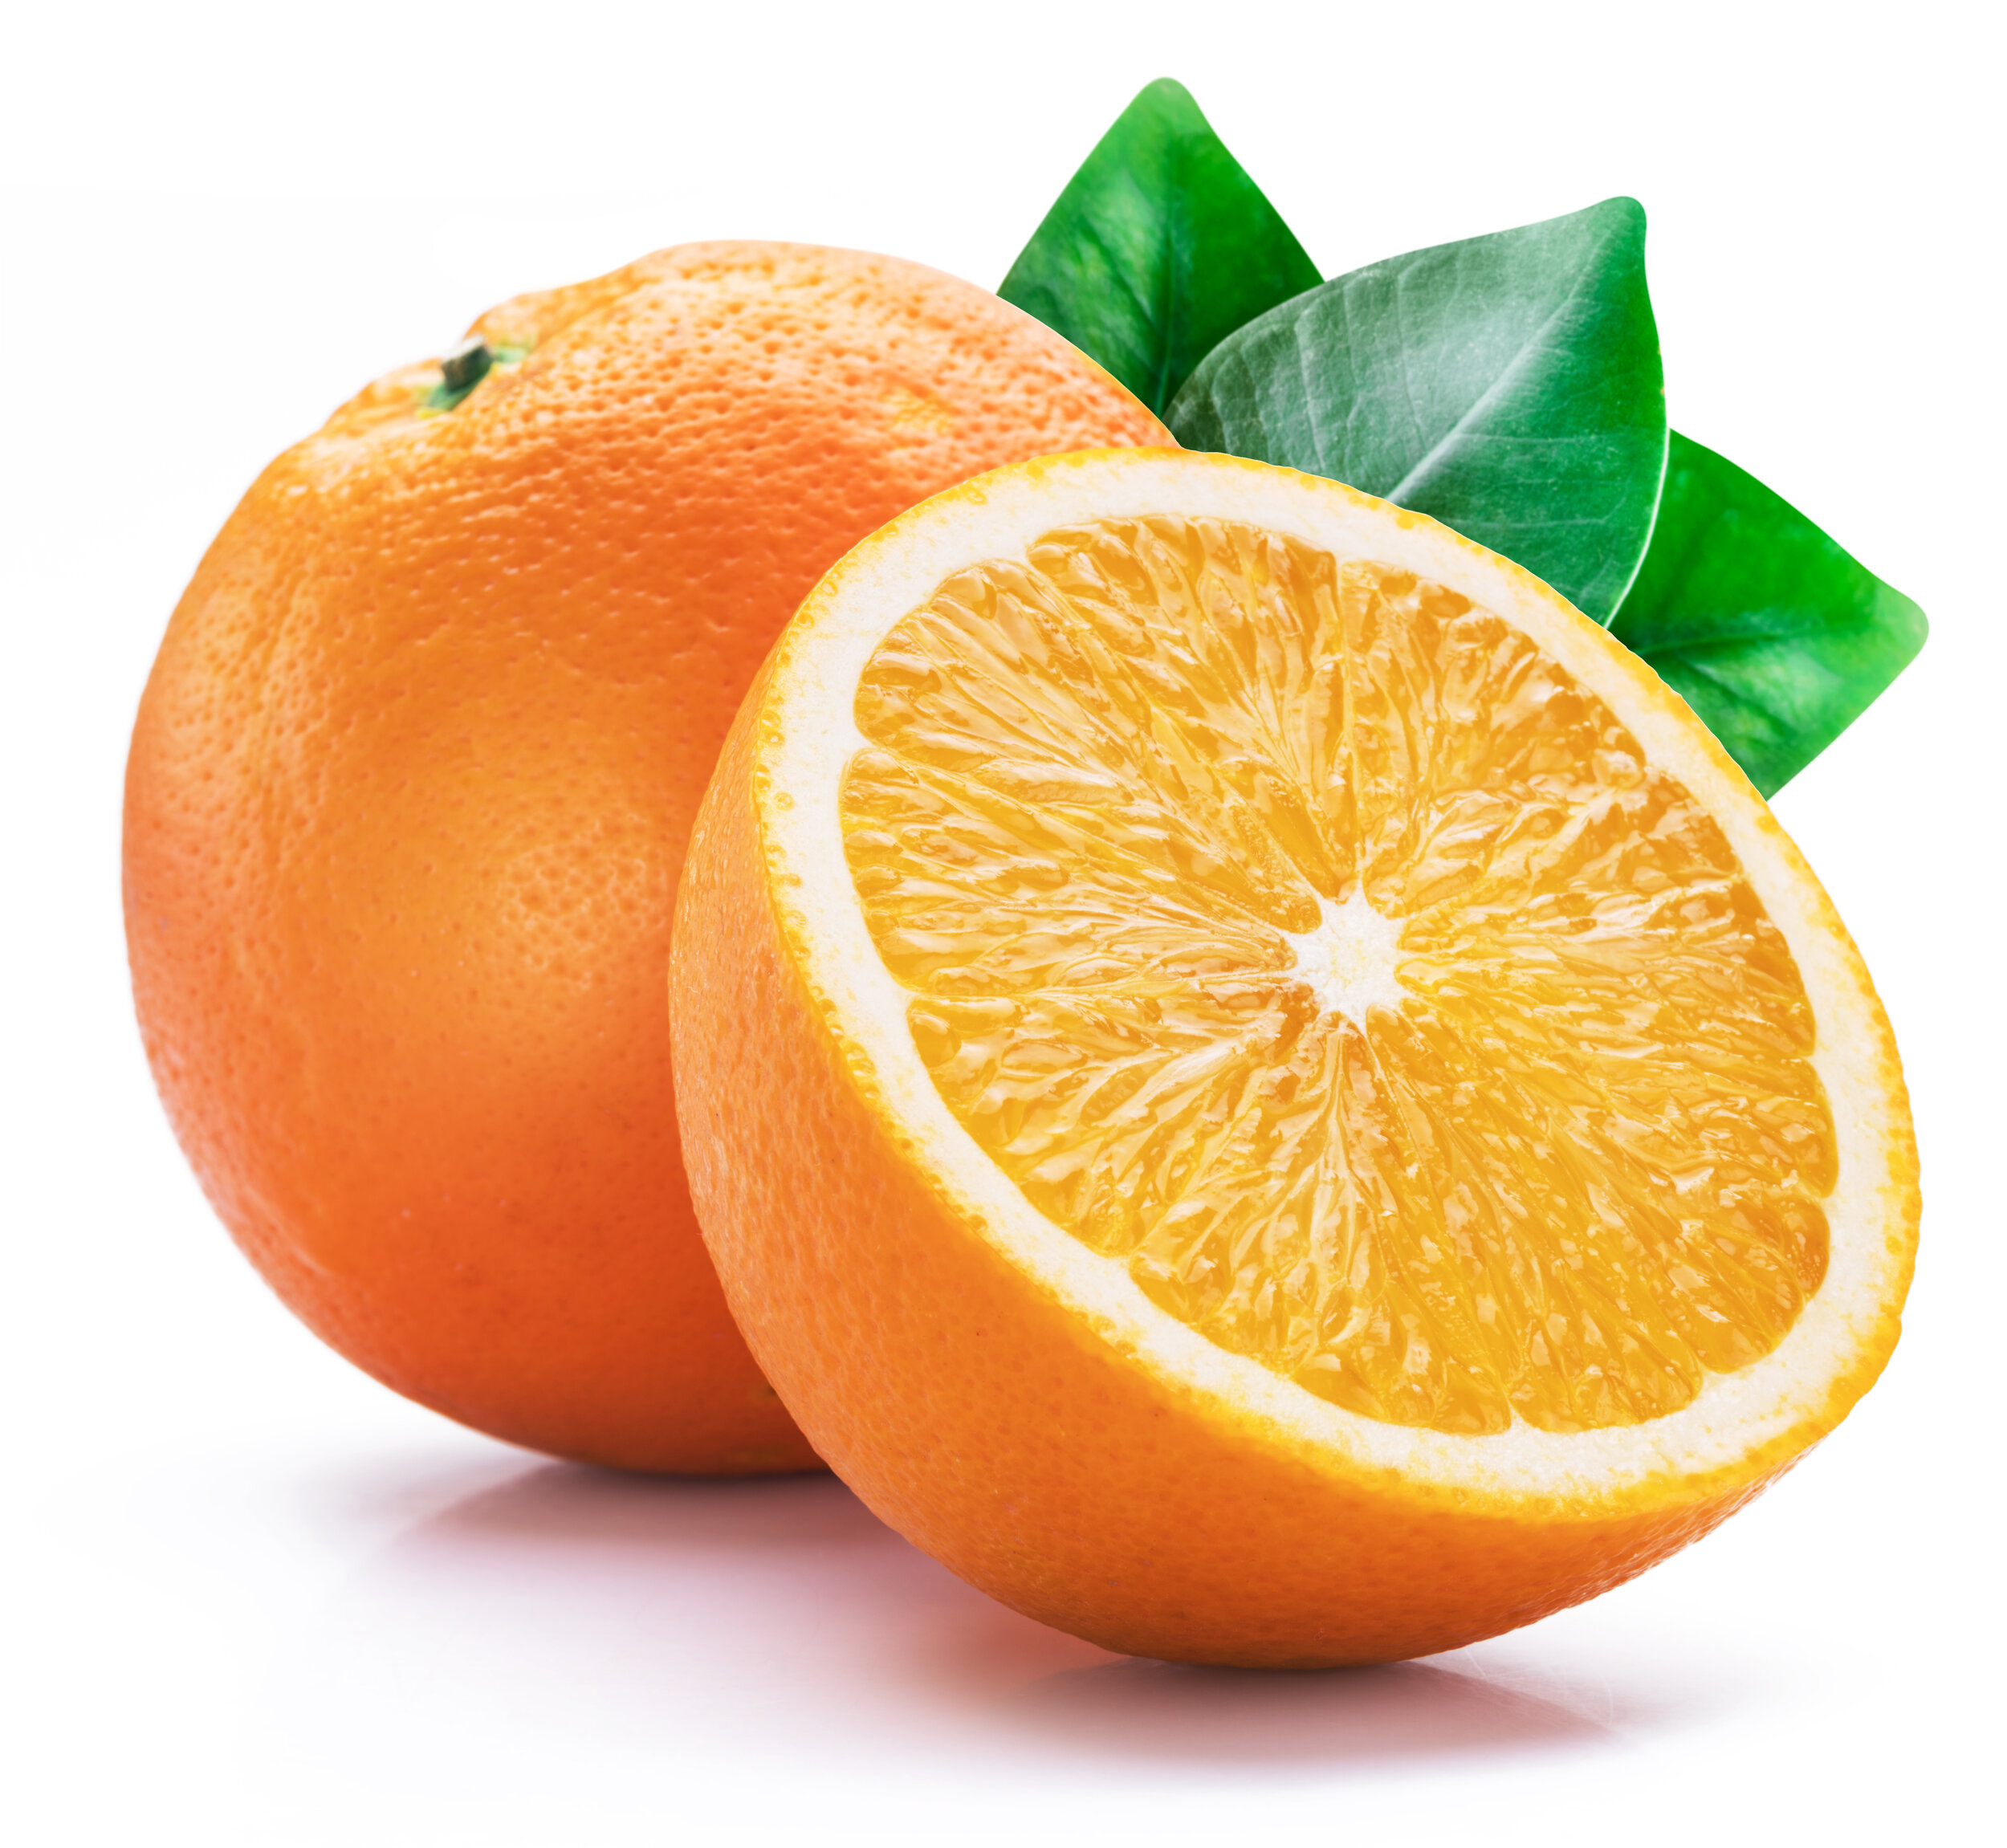 bigstock-Orange-fruit-with-orange-slice-299155783.jpg